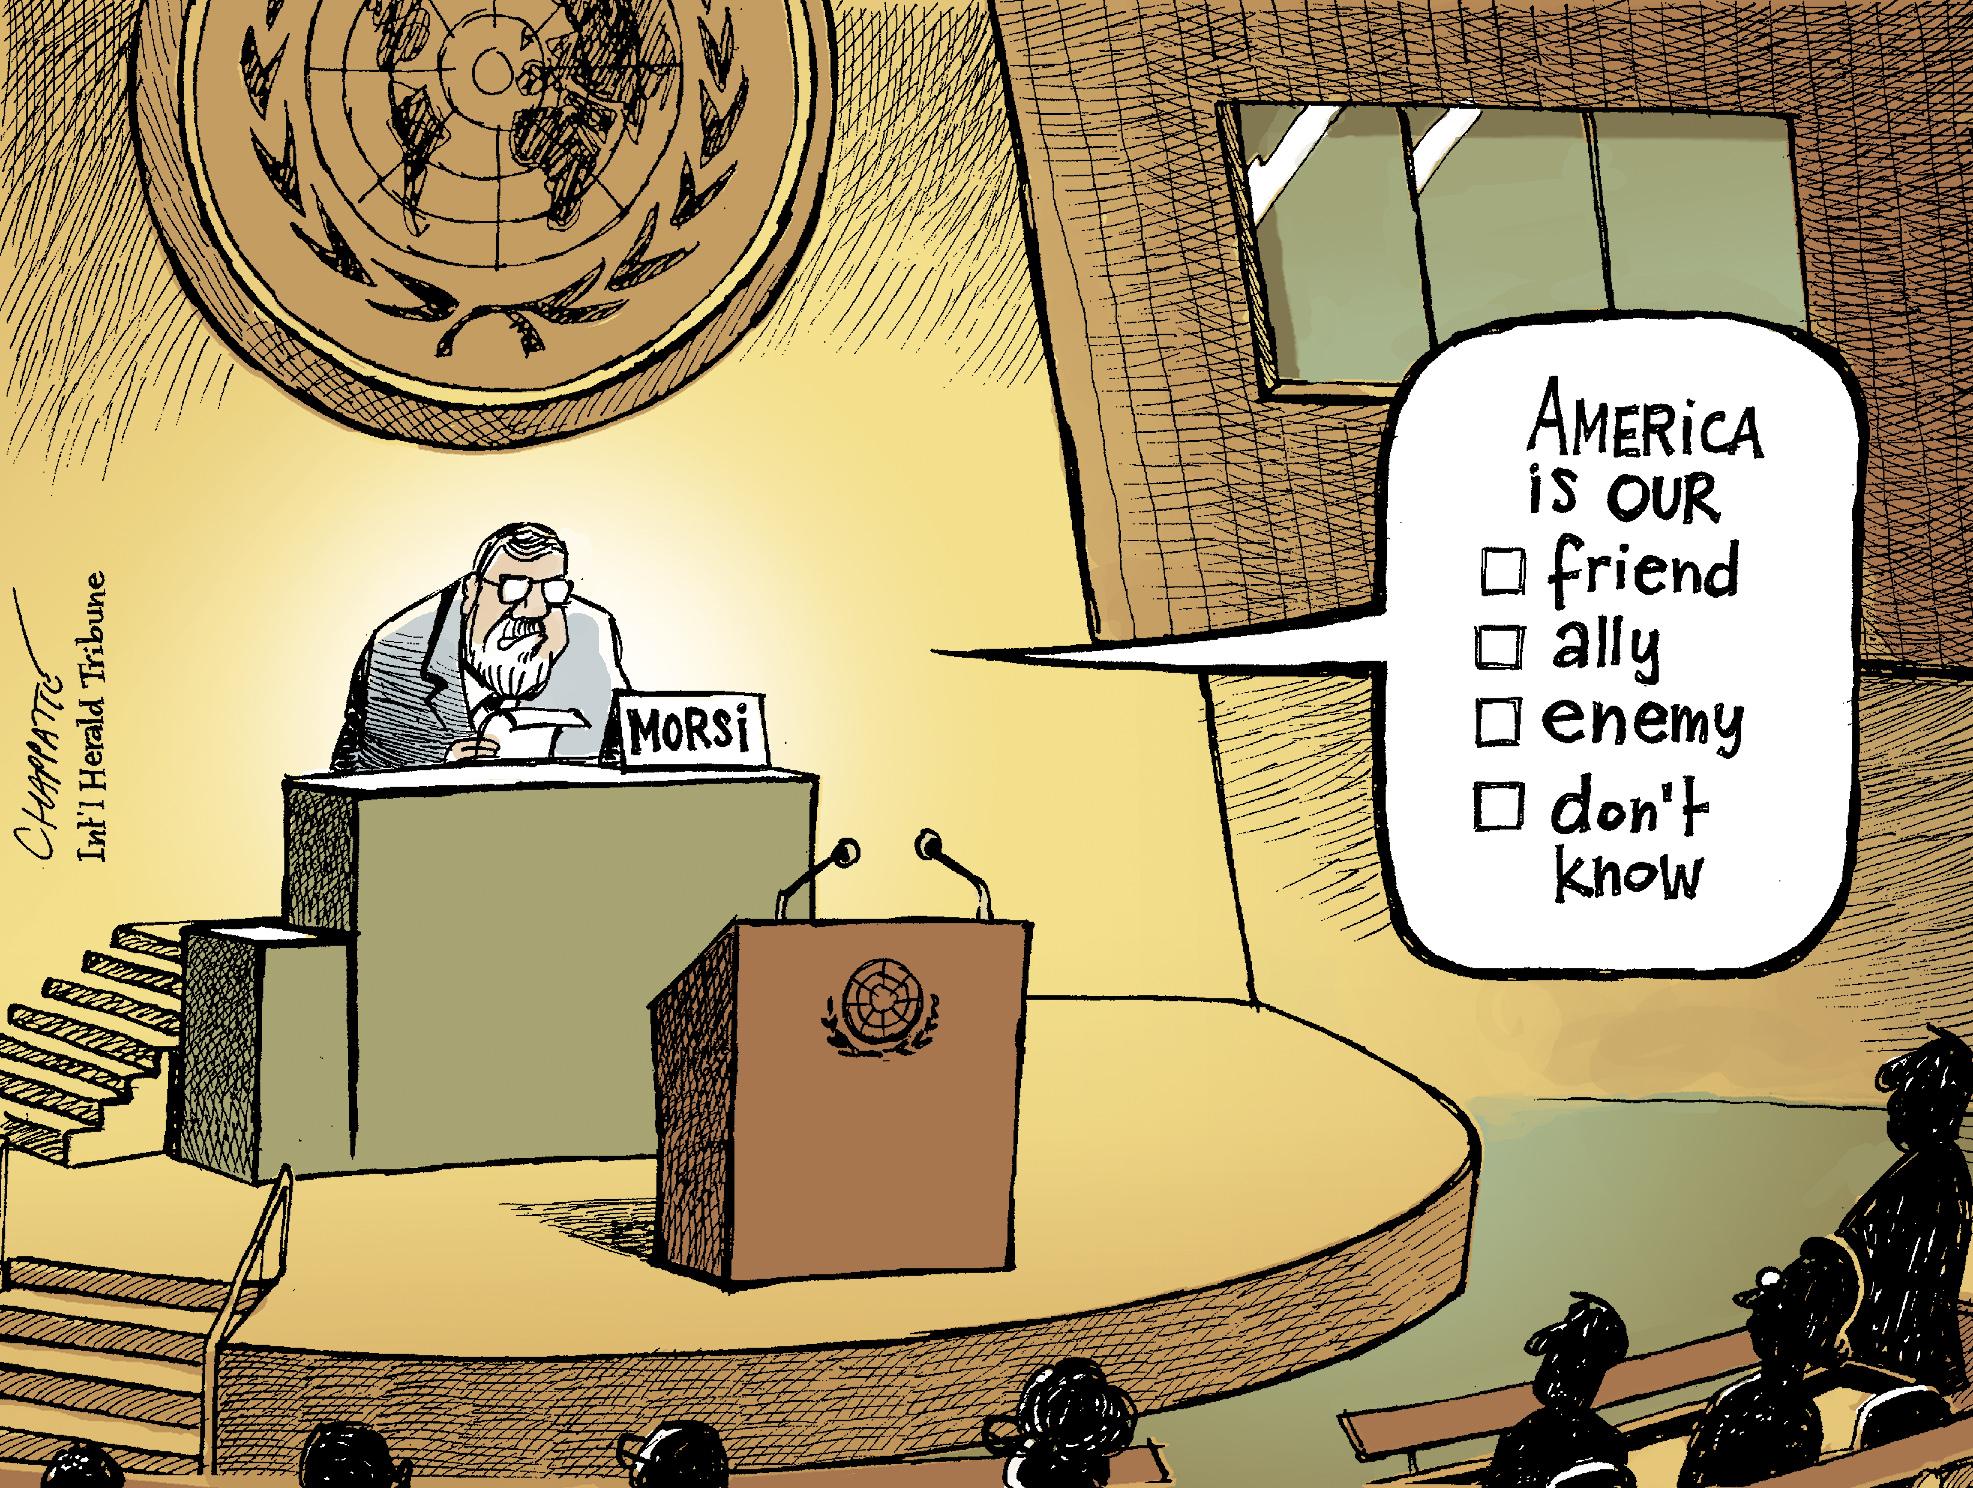 Egypt's President at the U.N.